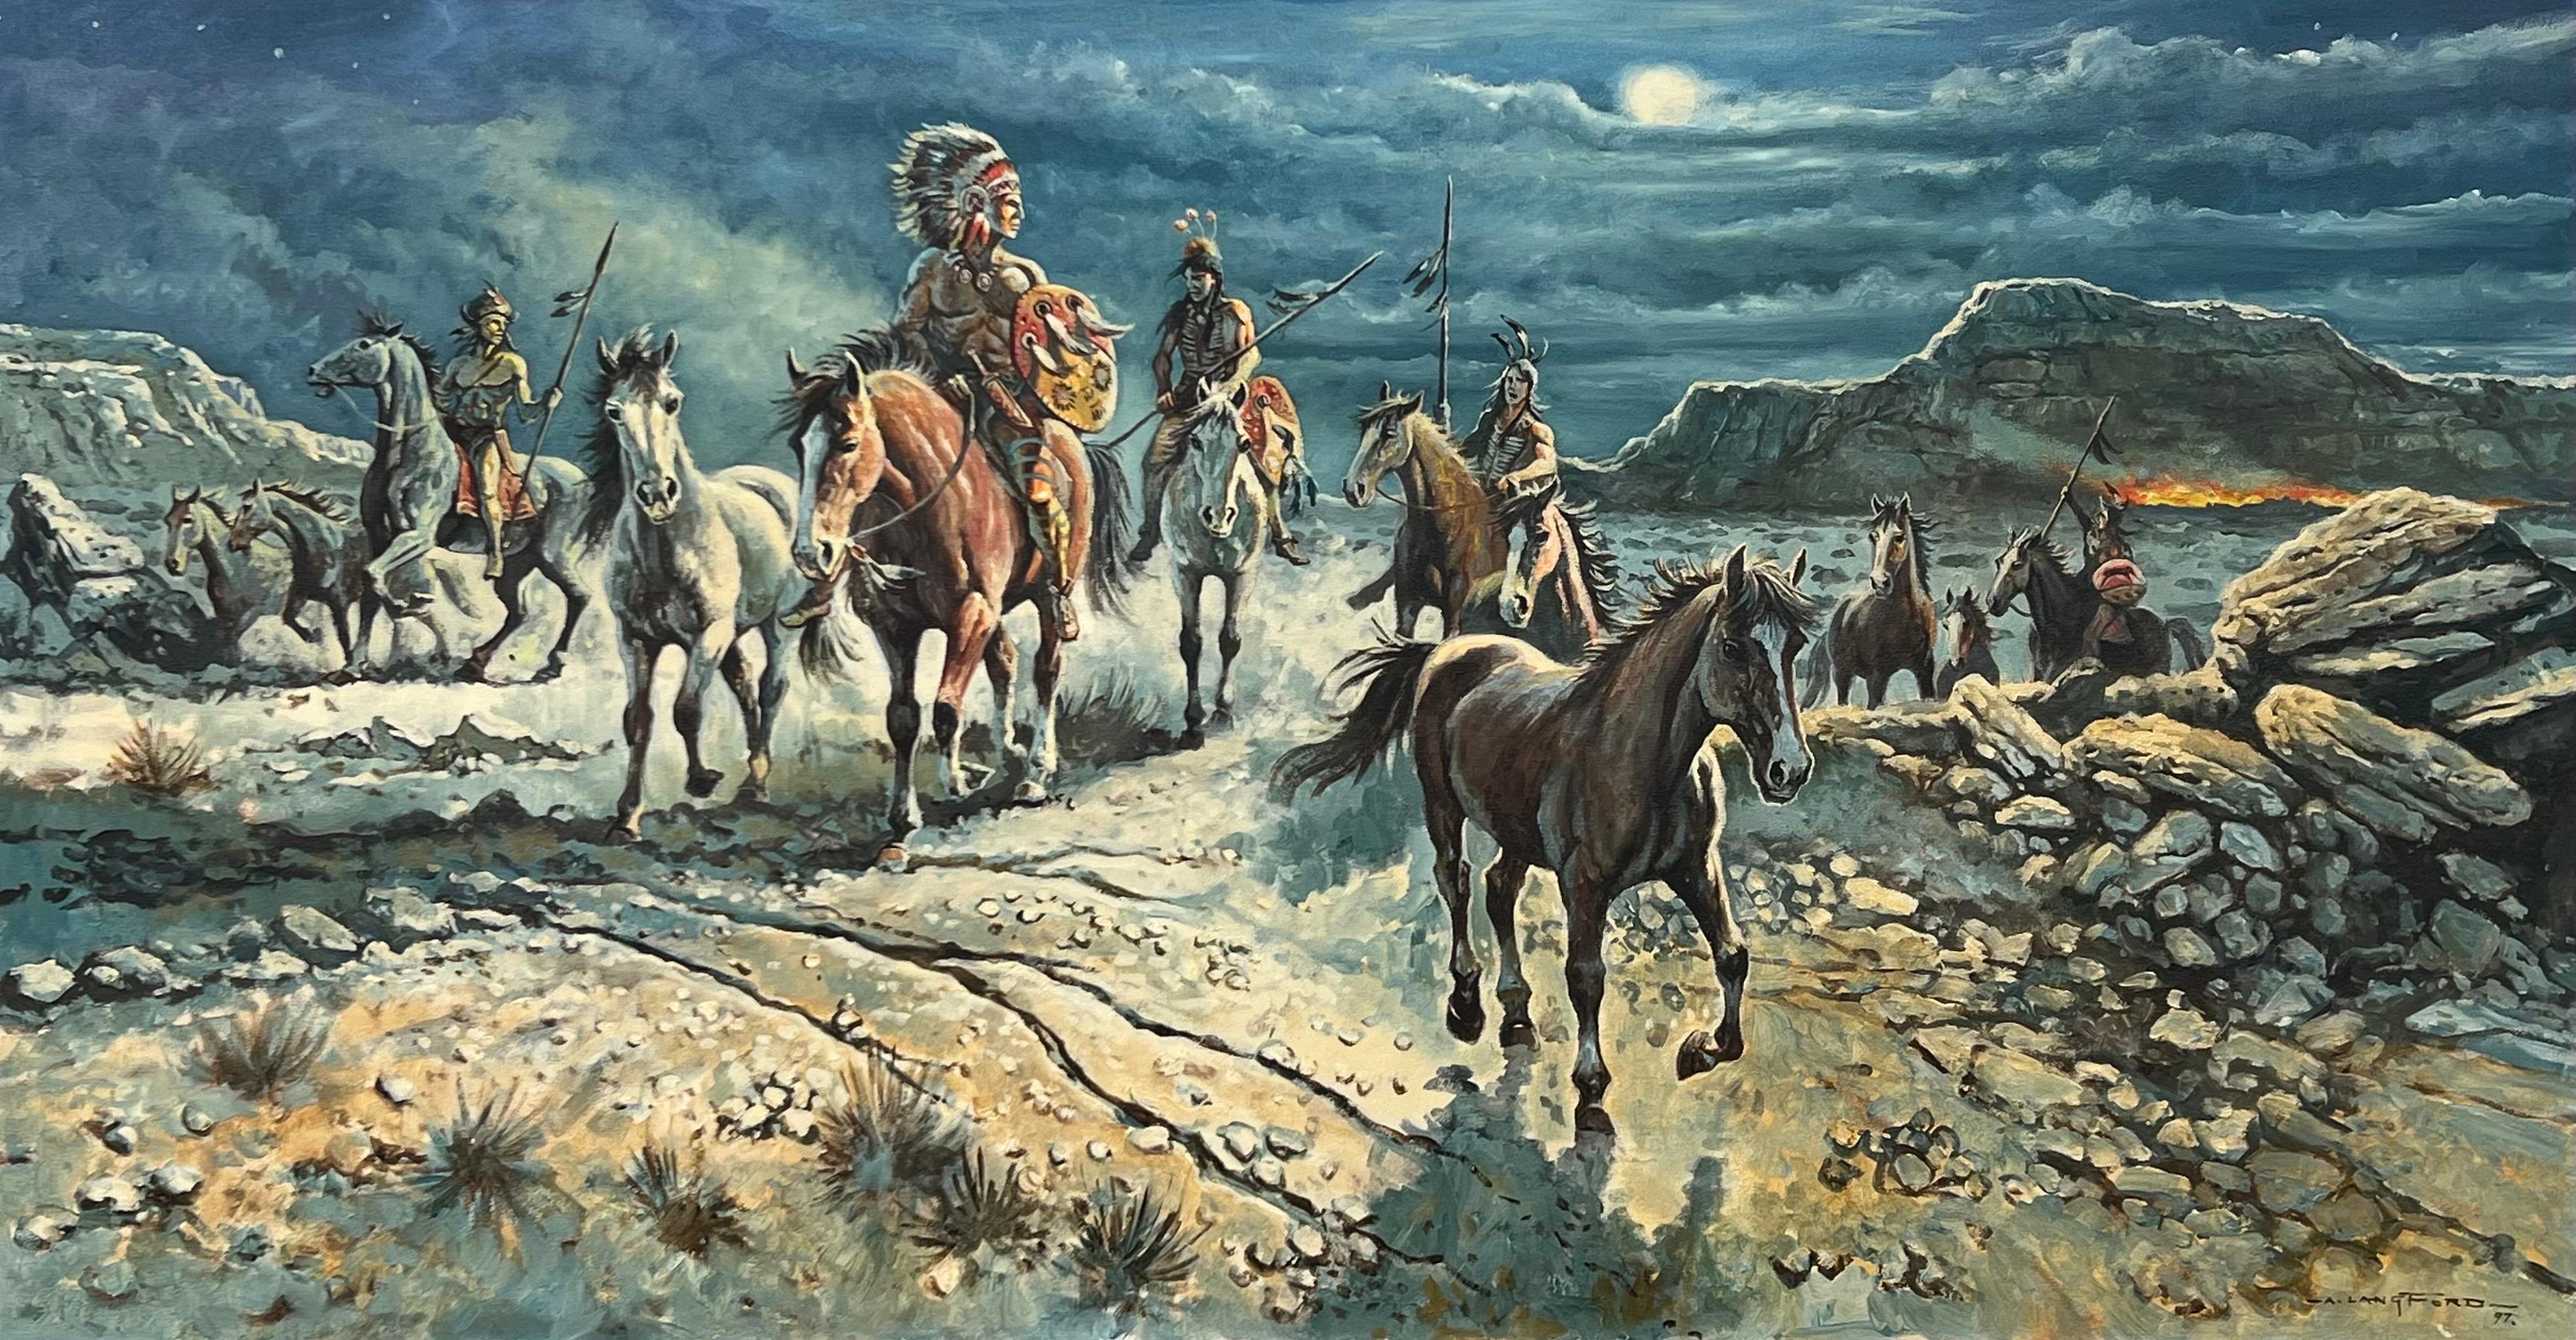 Alan Langford Animal Painting - Native American Indian Warriors on Horseback with Dramatic Moonlit Landscape